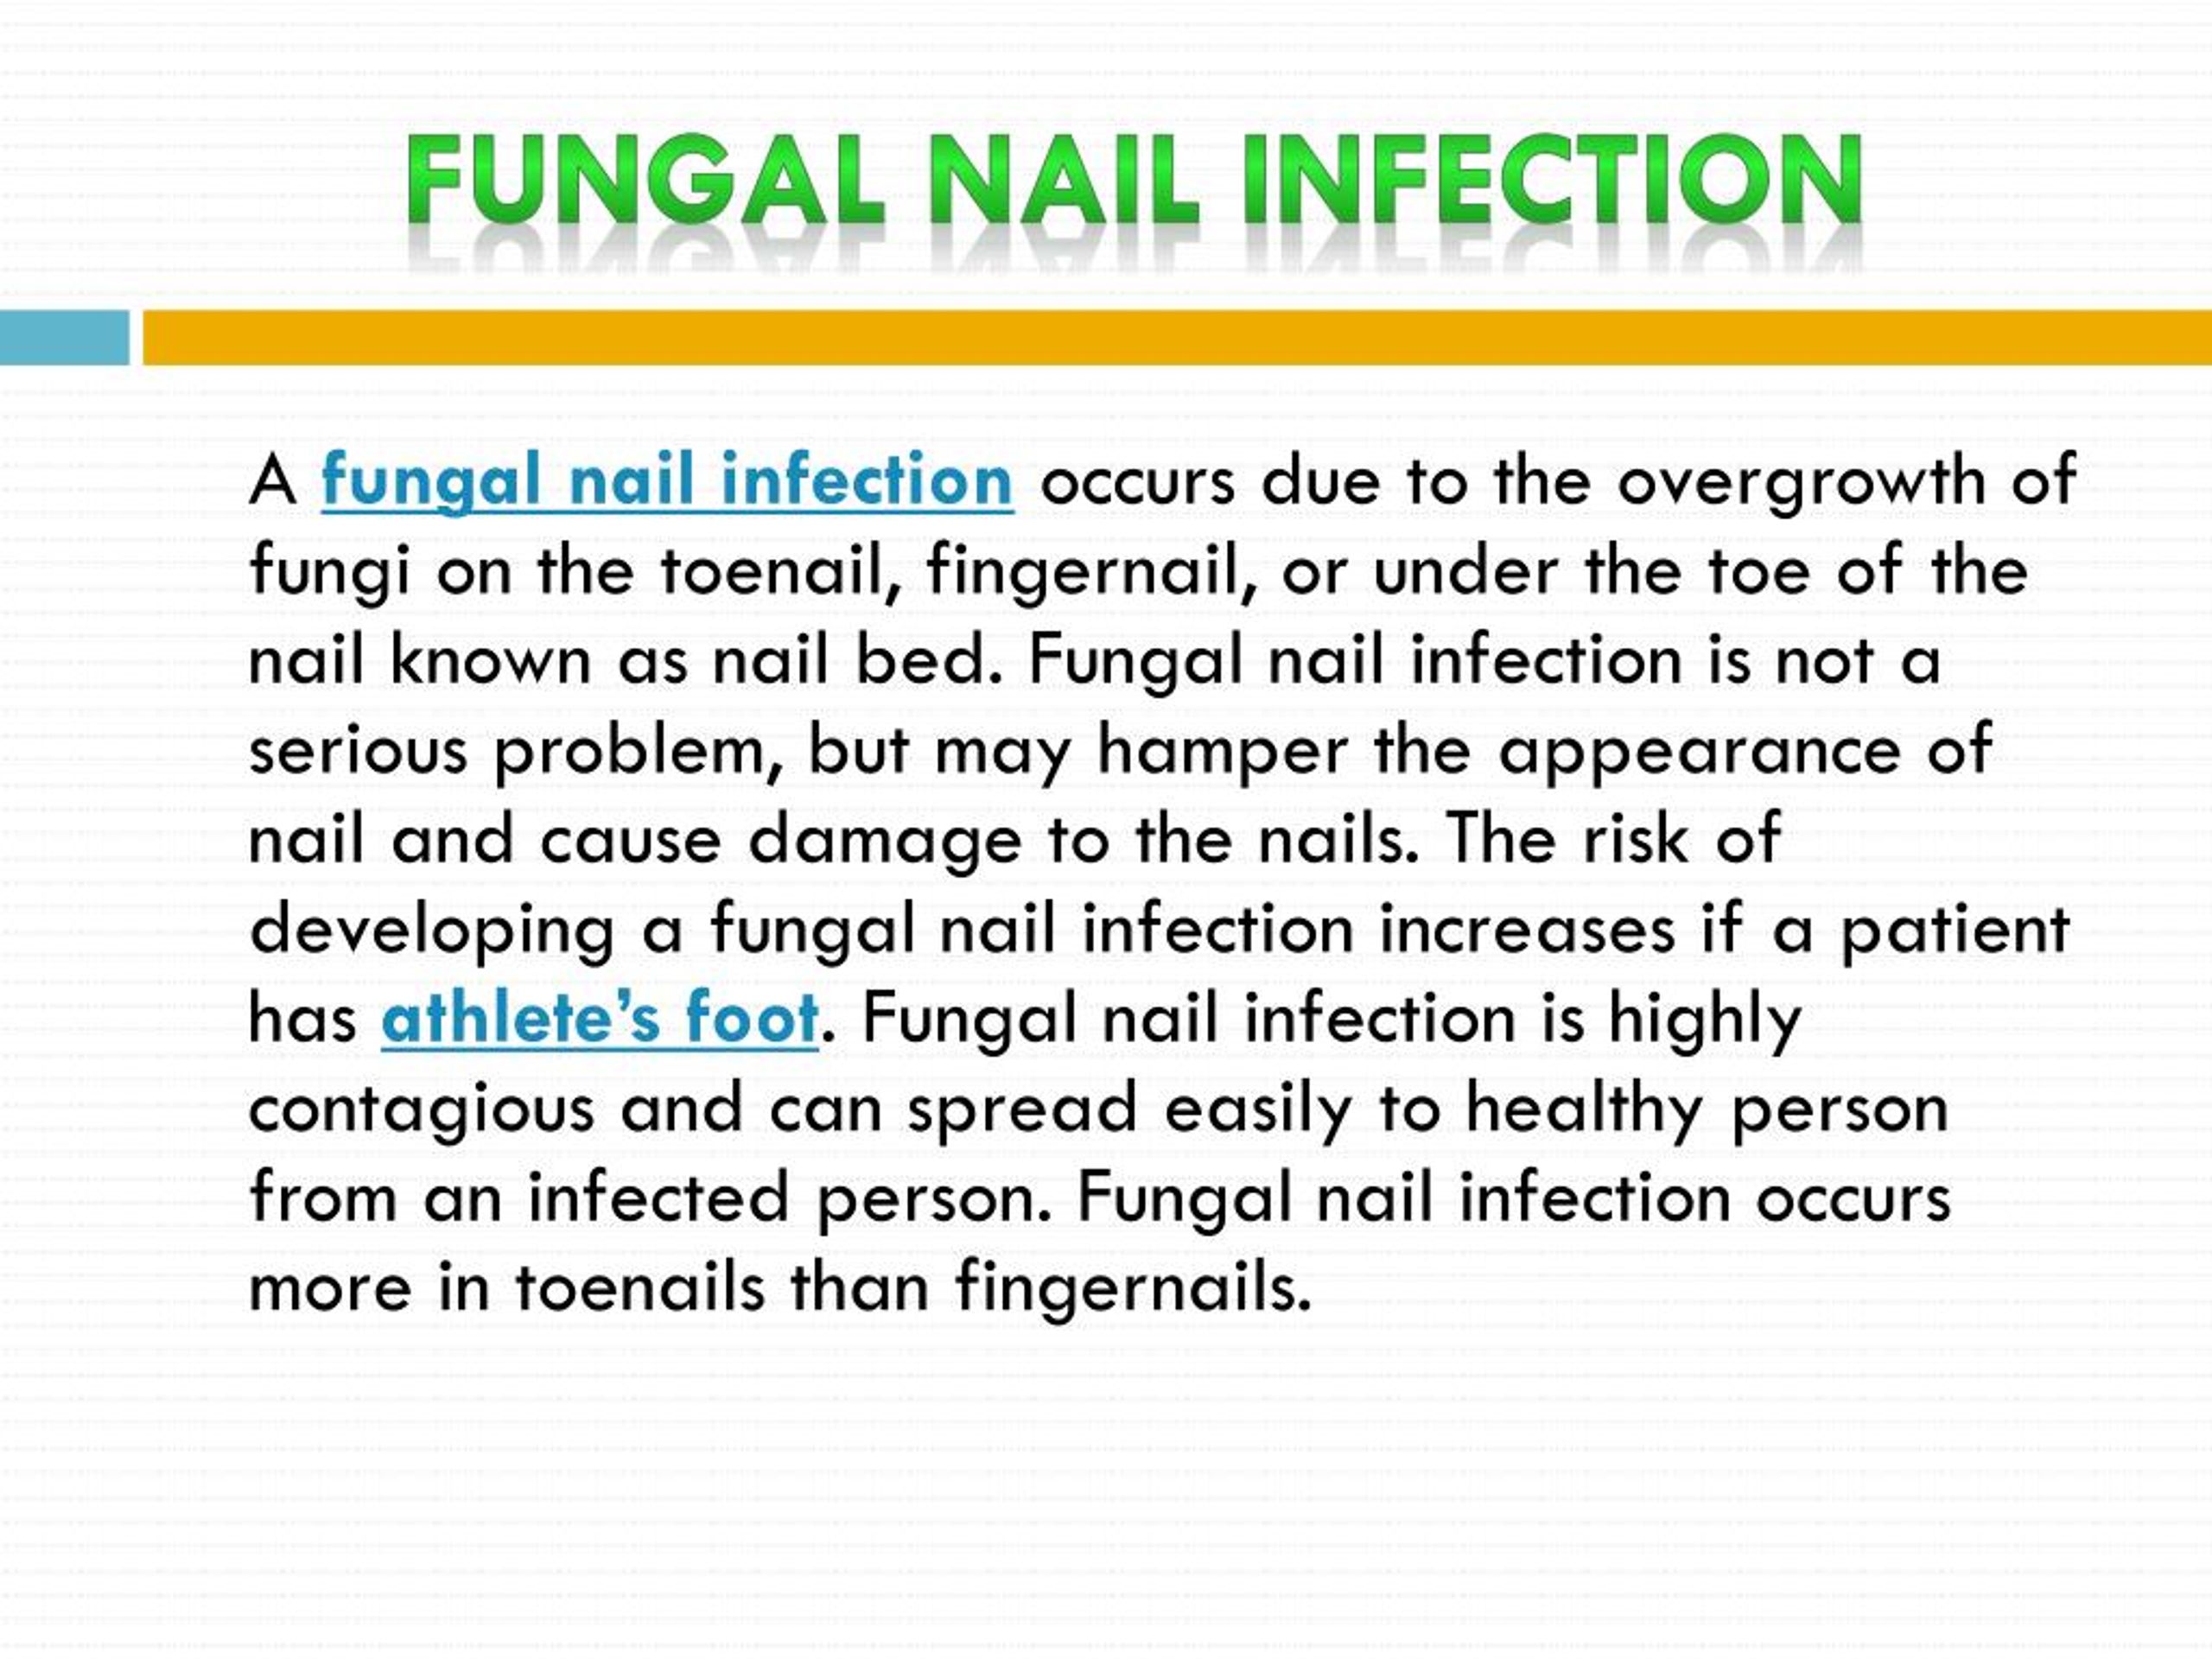 PPT - Fungal Nail Infection: Symptoms, Causes, Risk factors, Diagnosis ...